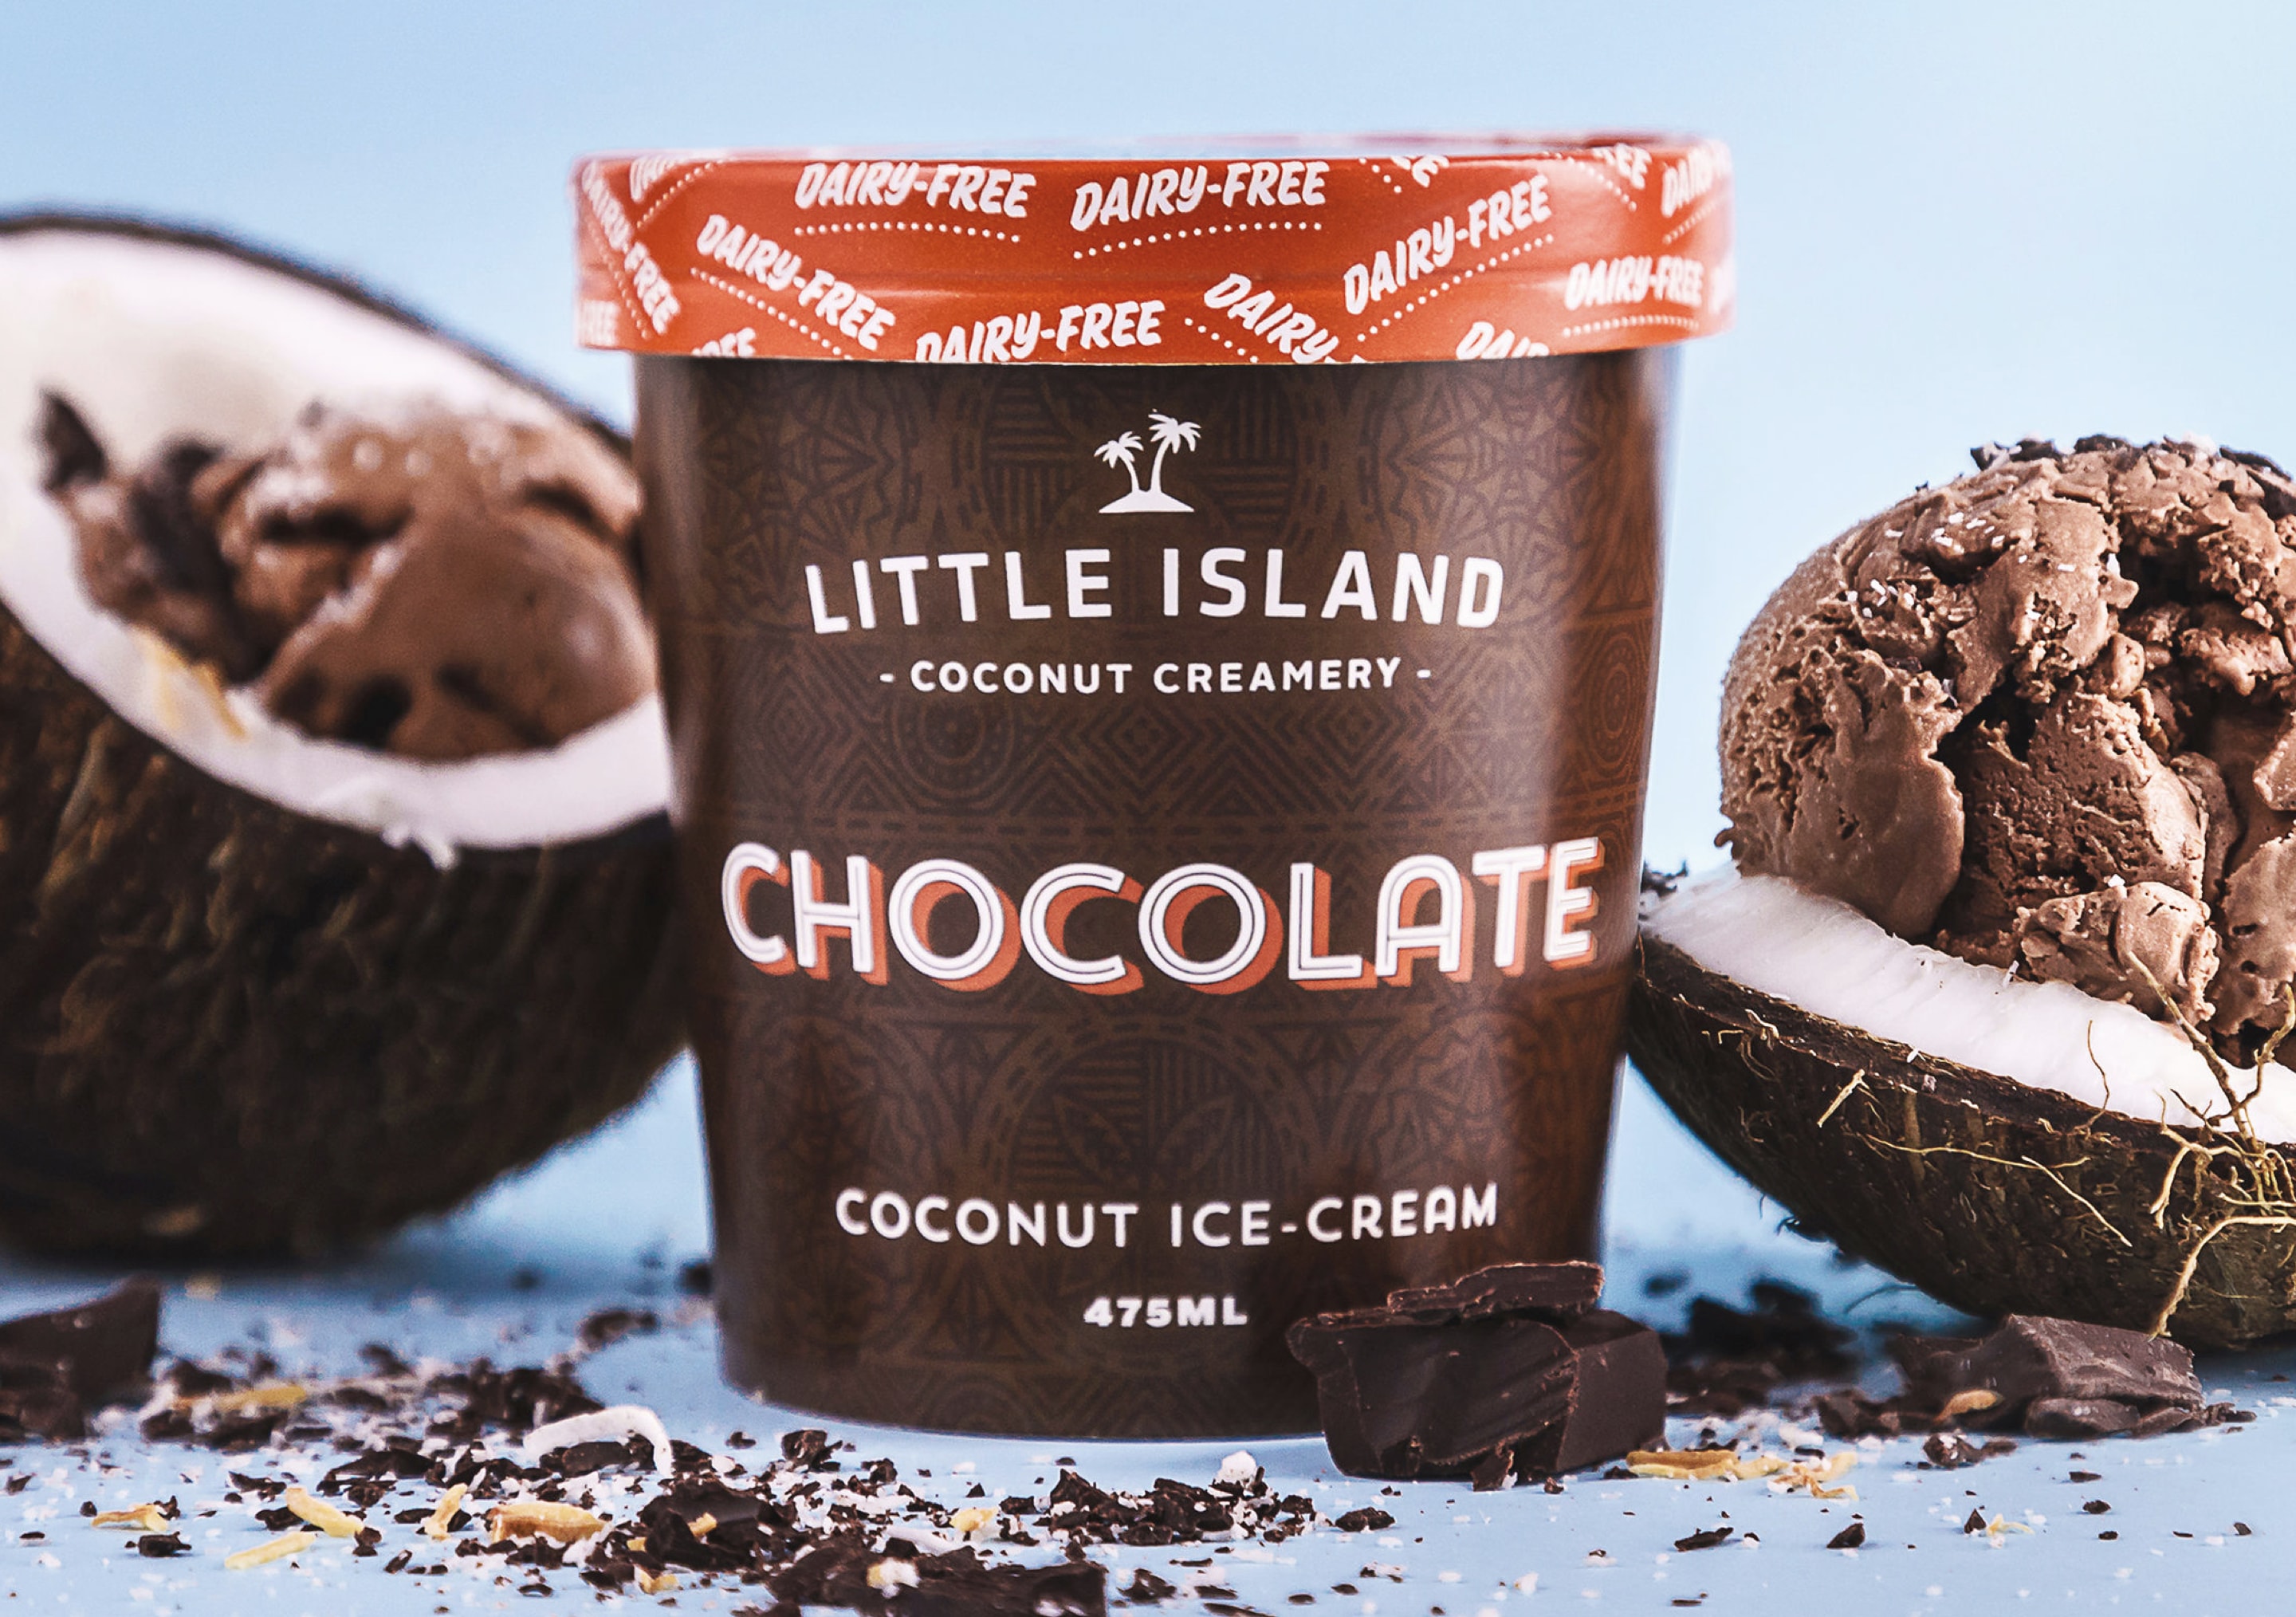 Little Island chocolate Ice cream